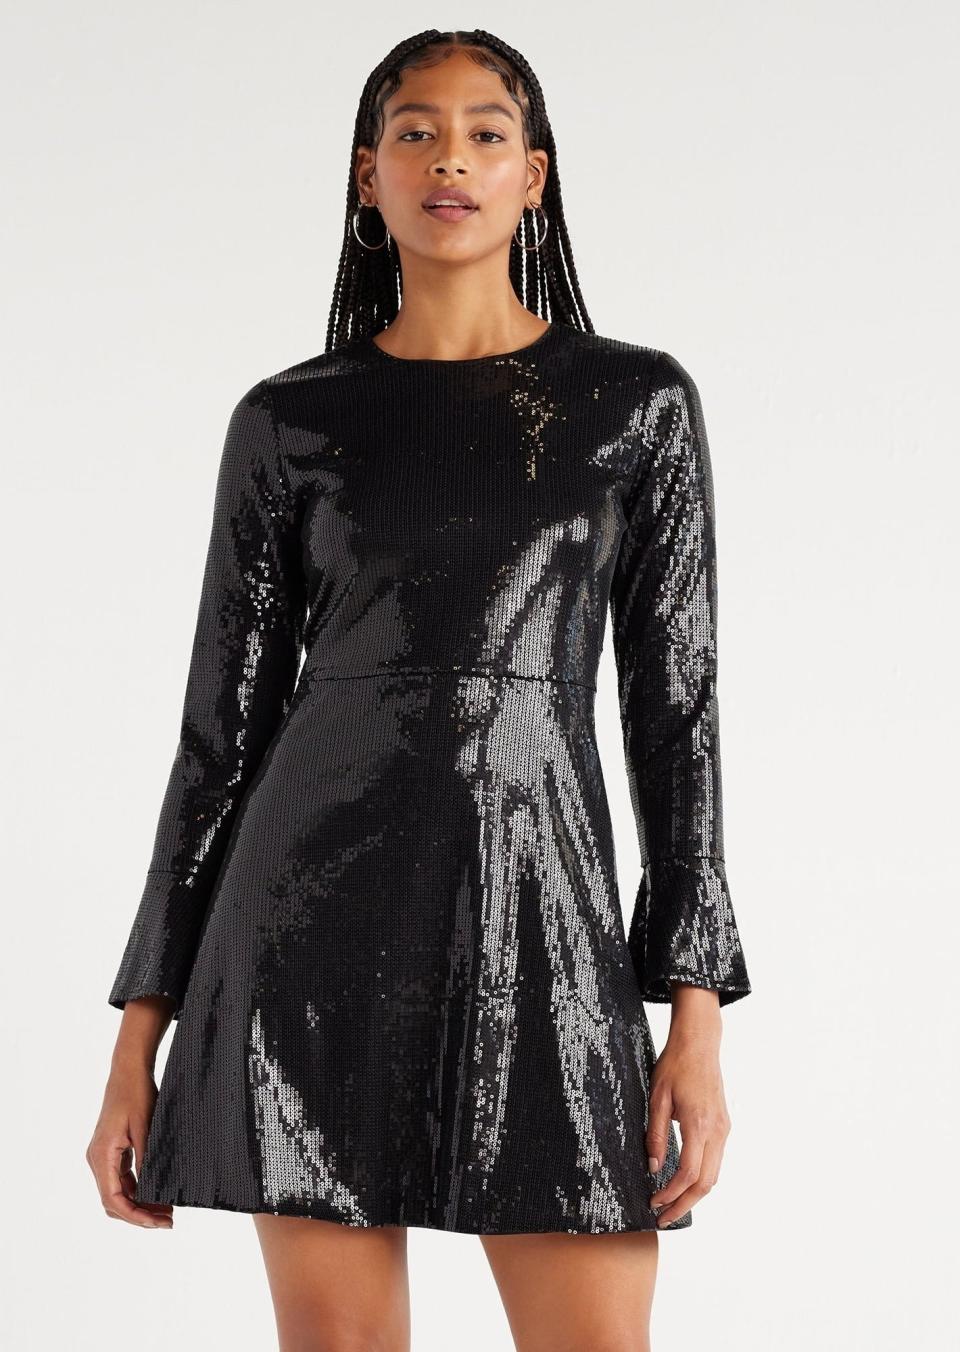 model wearing the black sequin dress